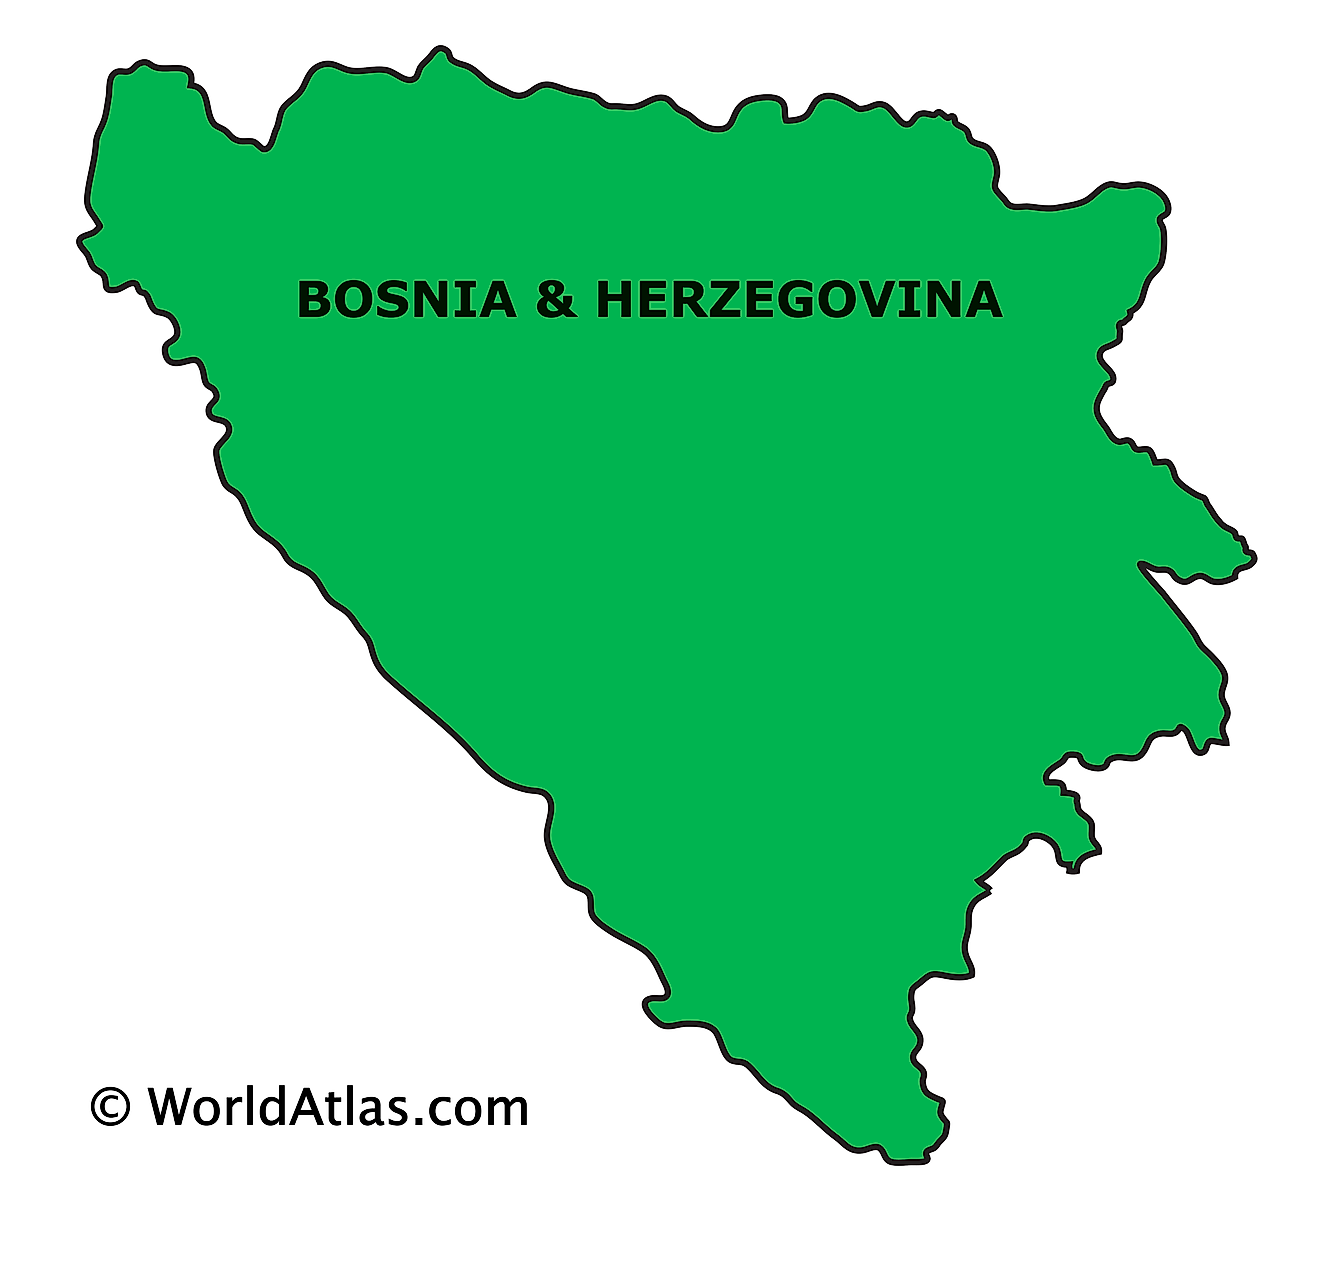 Mapa de contorno de Bosnia y Herzegovina